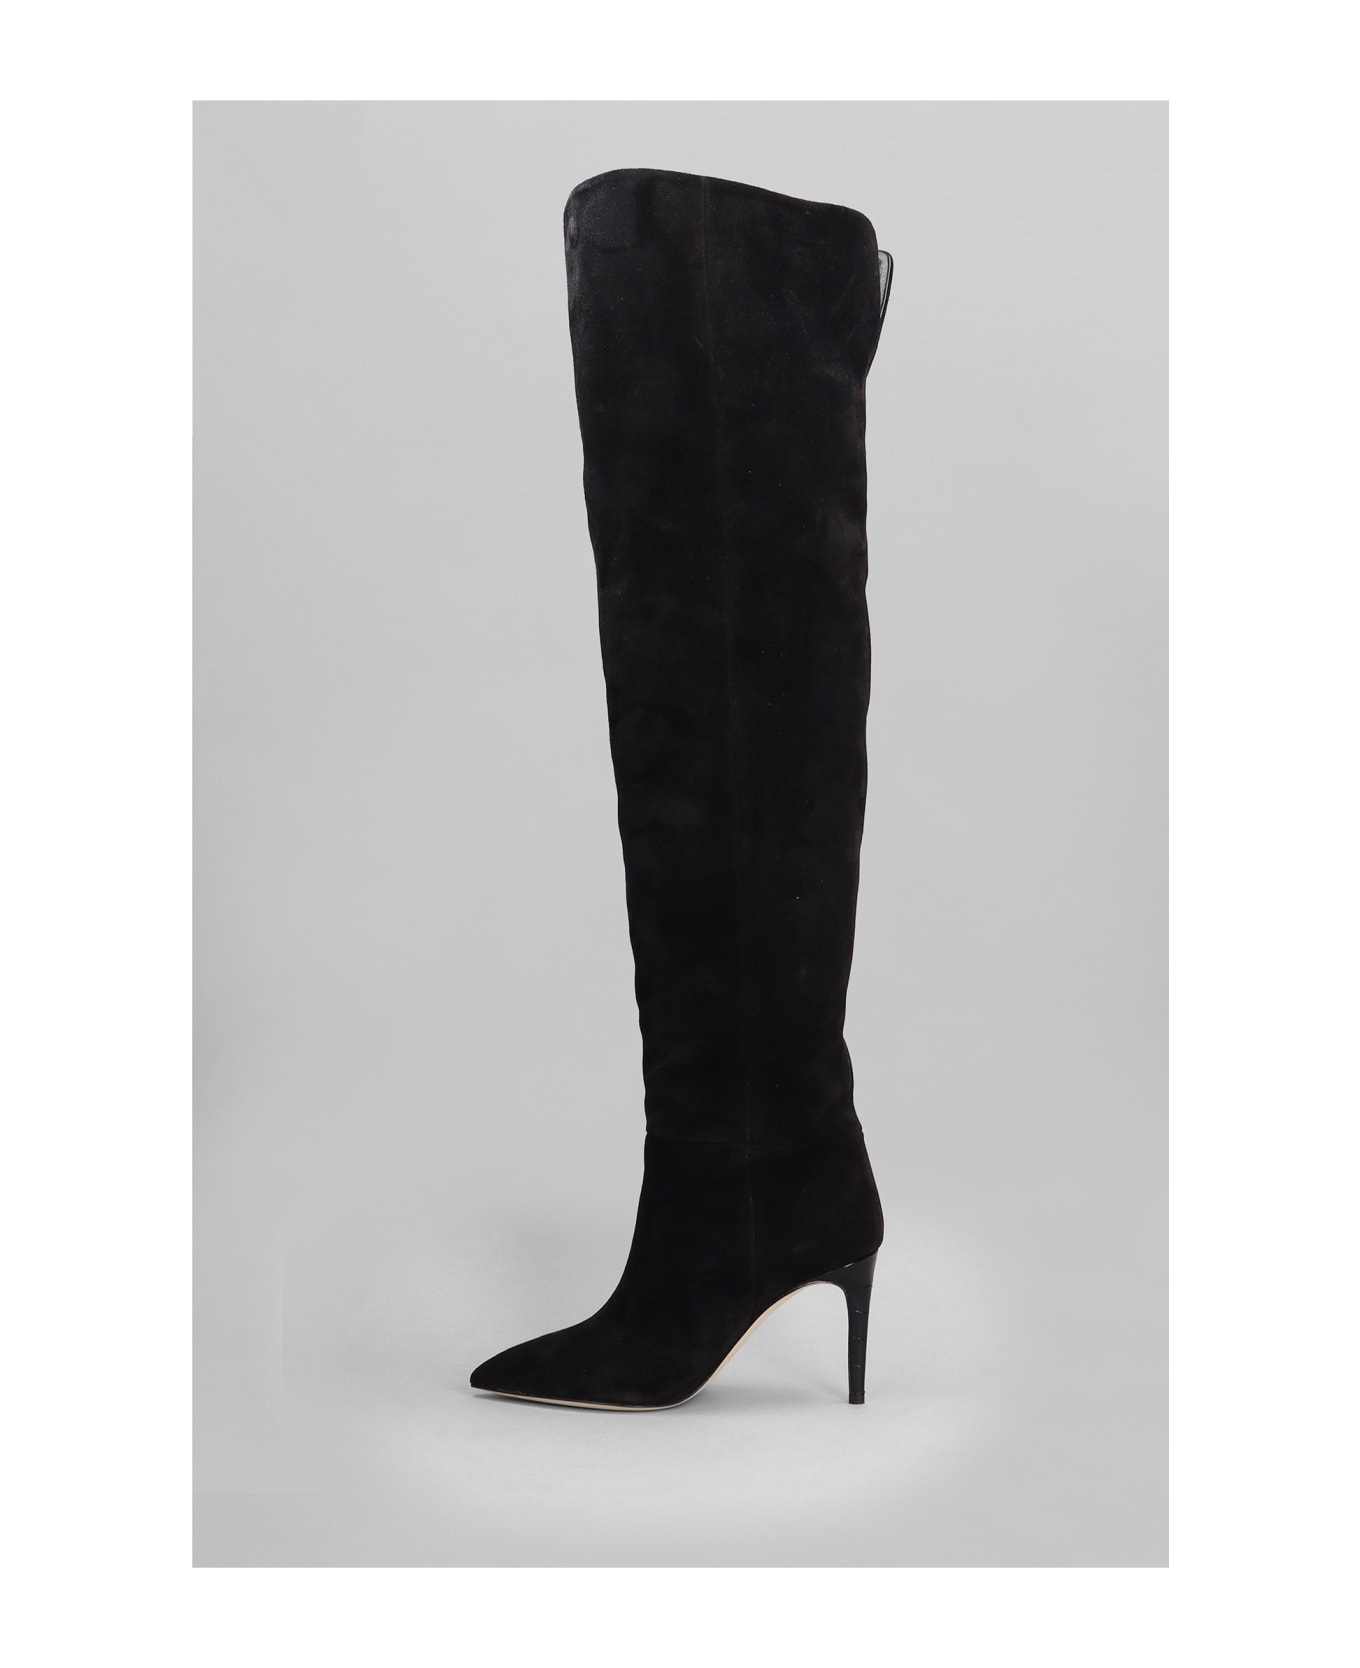 Paris Texas High Heels Boots In Black Suede - black